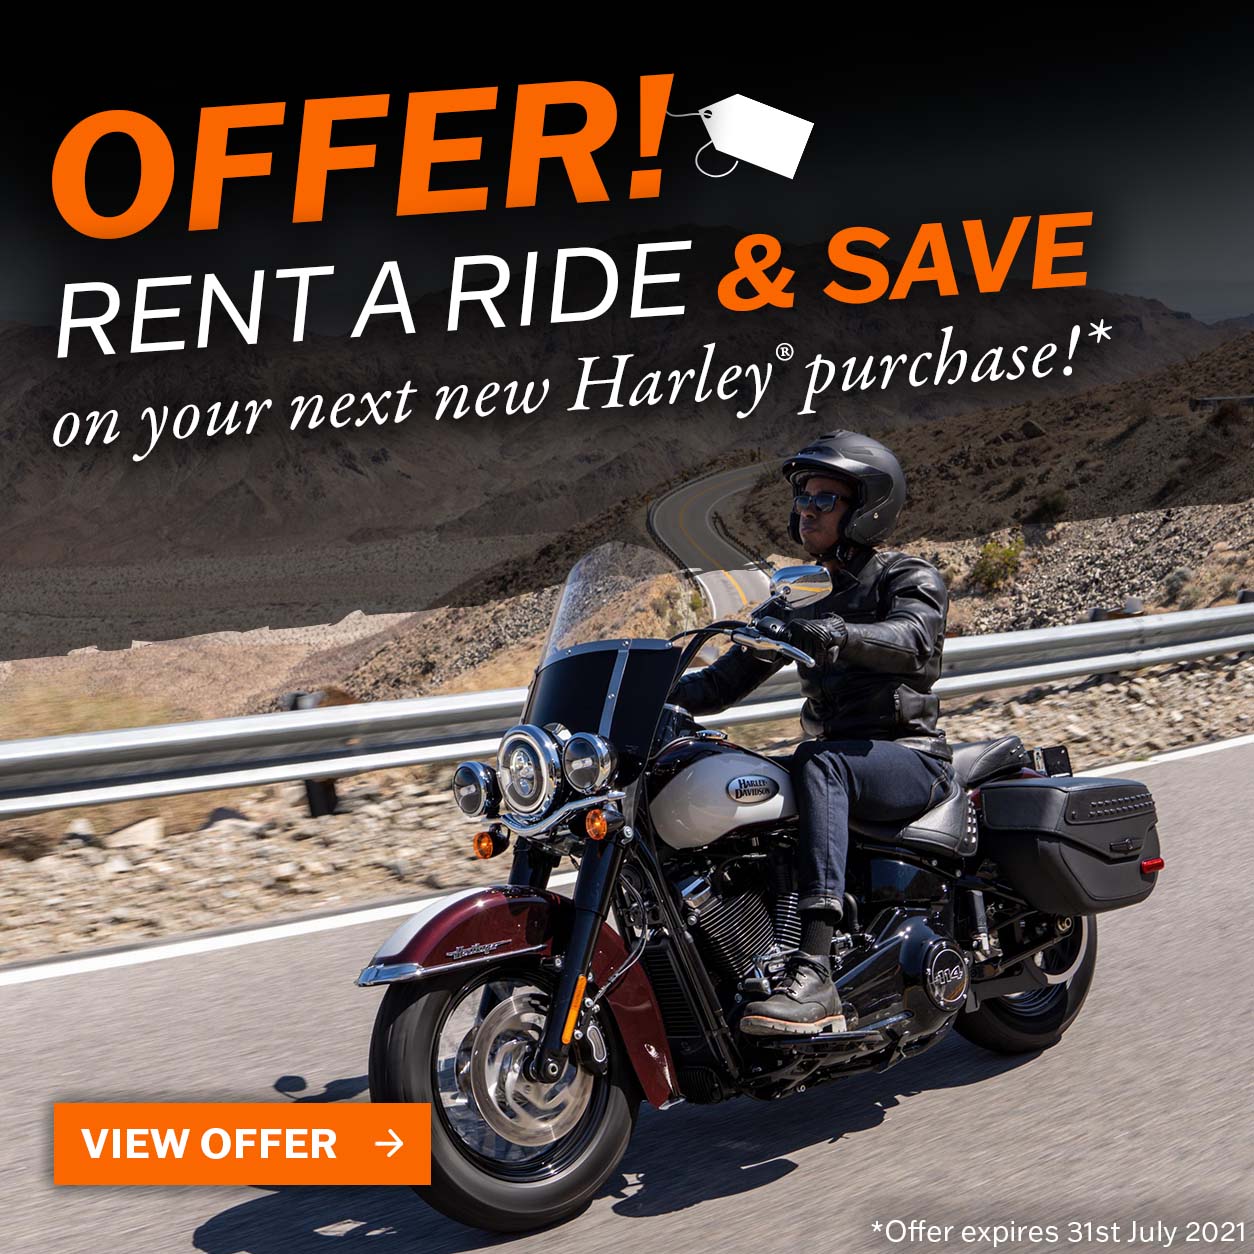 Maidstone Harley-Davidson New Bike Rentals Offer